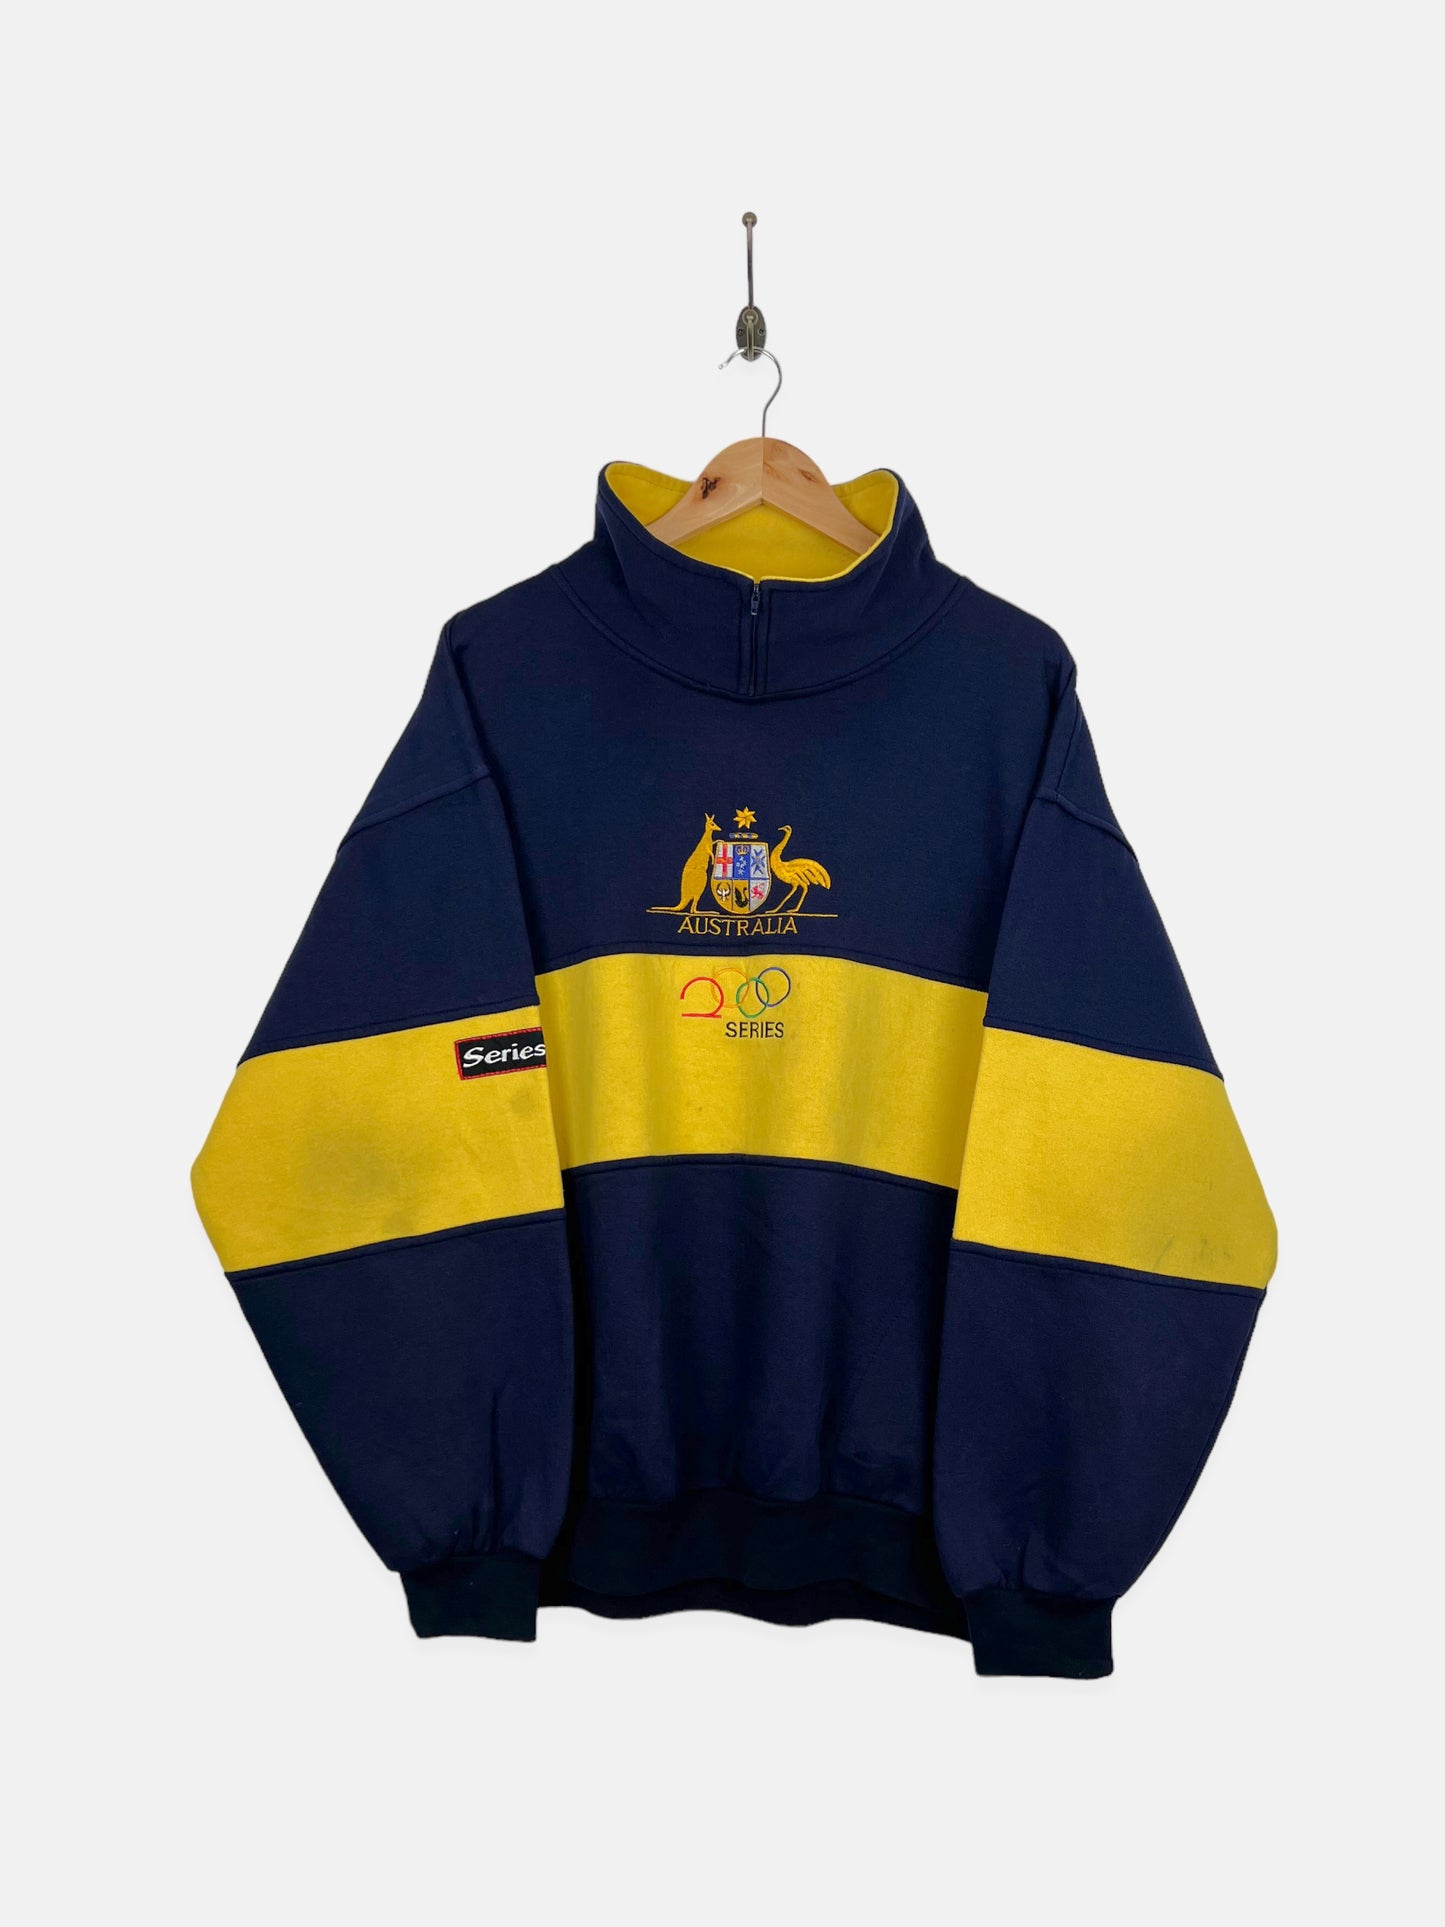 Australia 2000 Series Embroidered Vintage Collared Sweatshirt Size XL